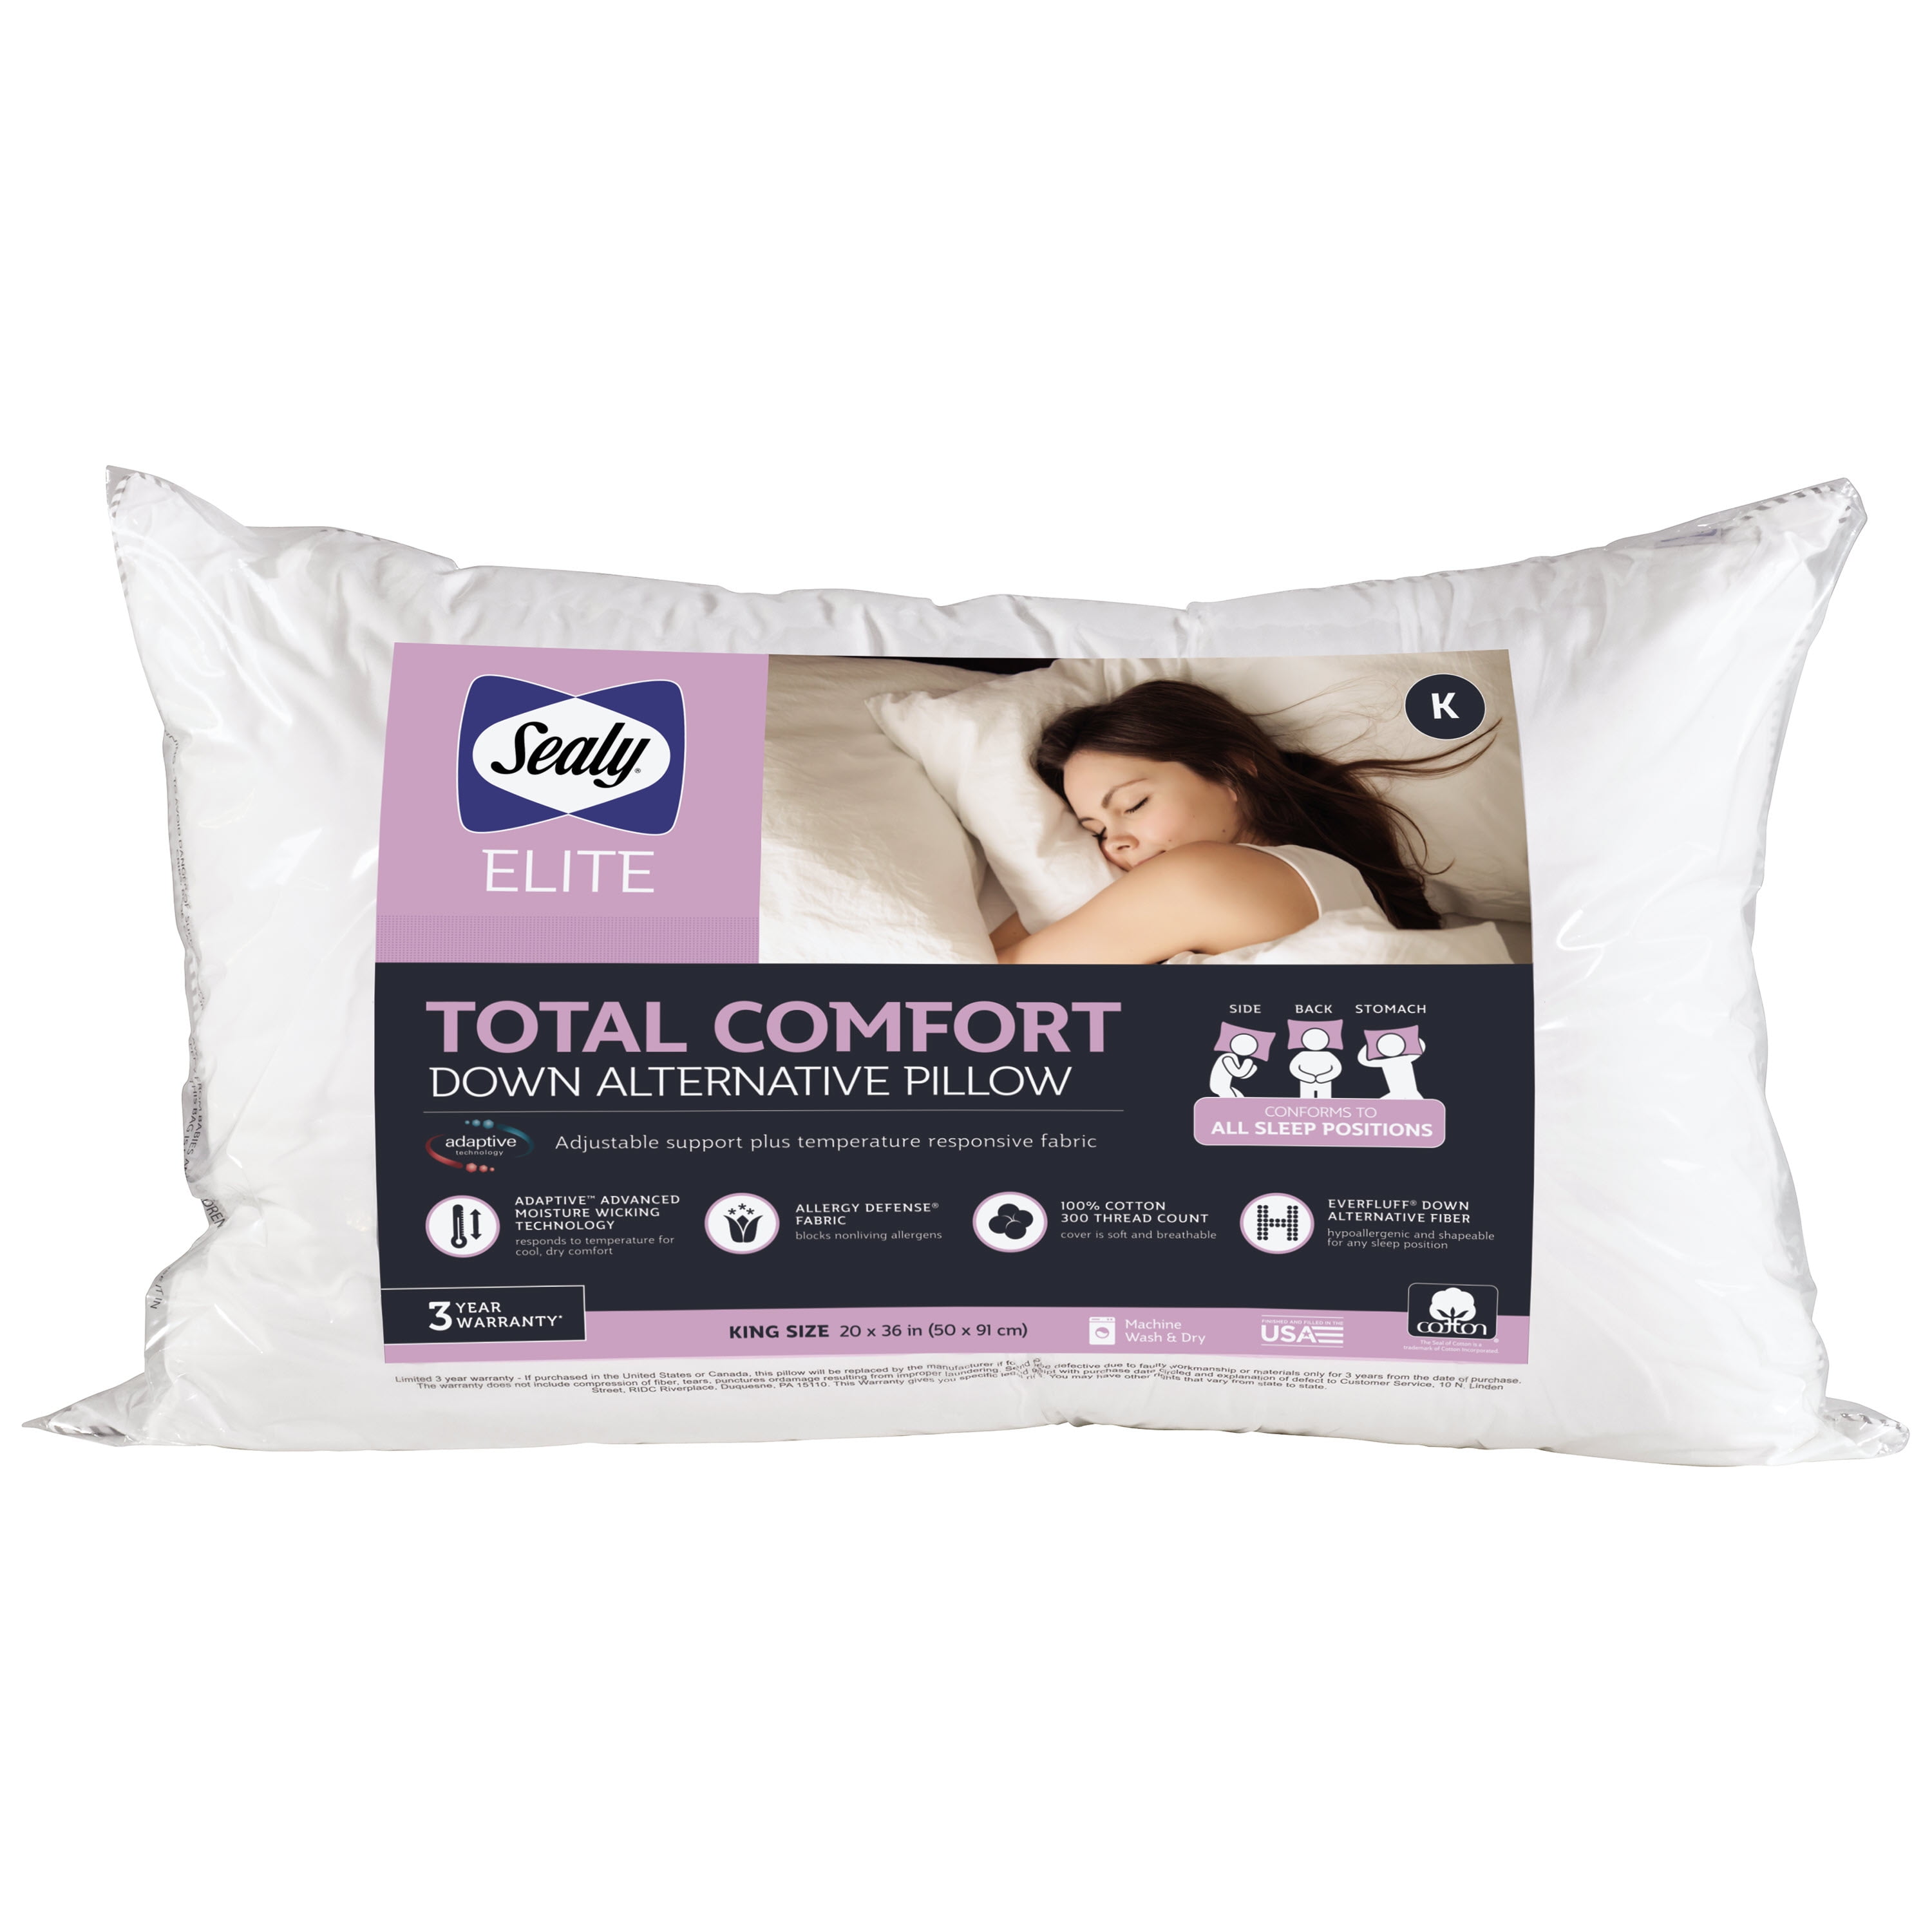 next sleep in comfort pillows